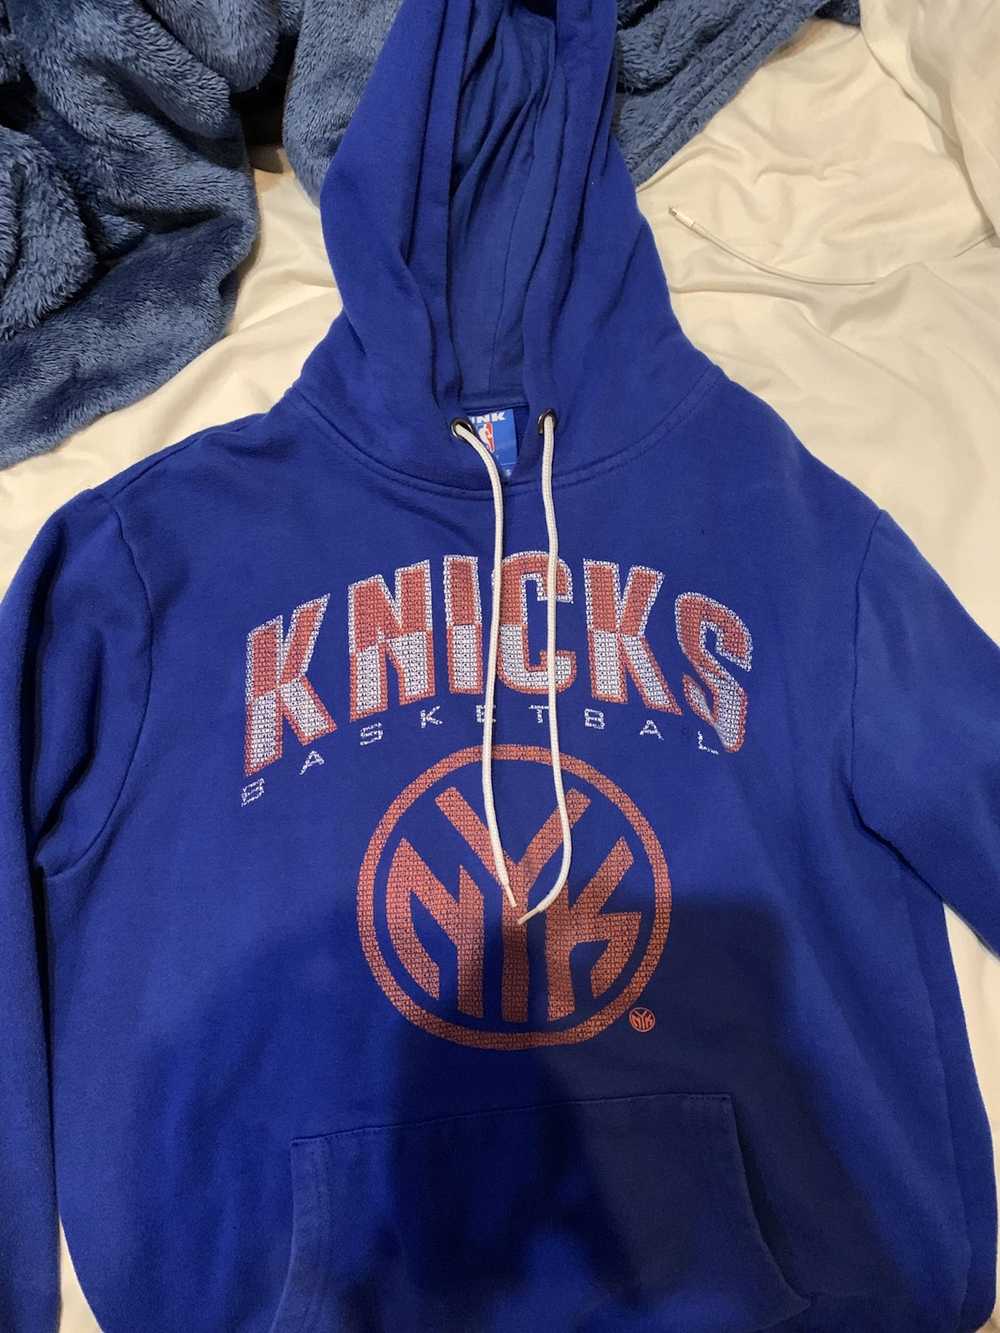 NBA New York Knicks Hoodie - image 1